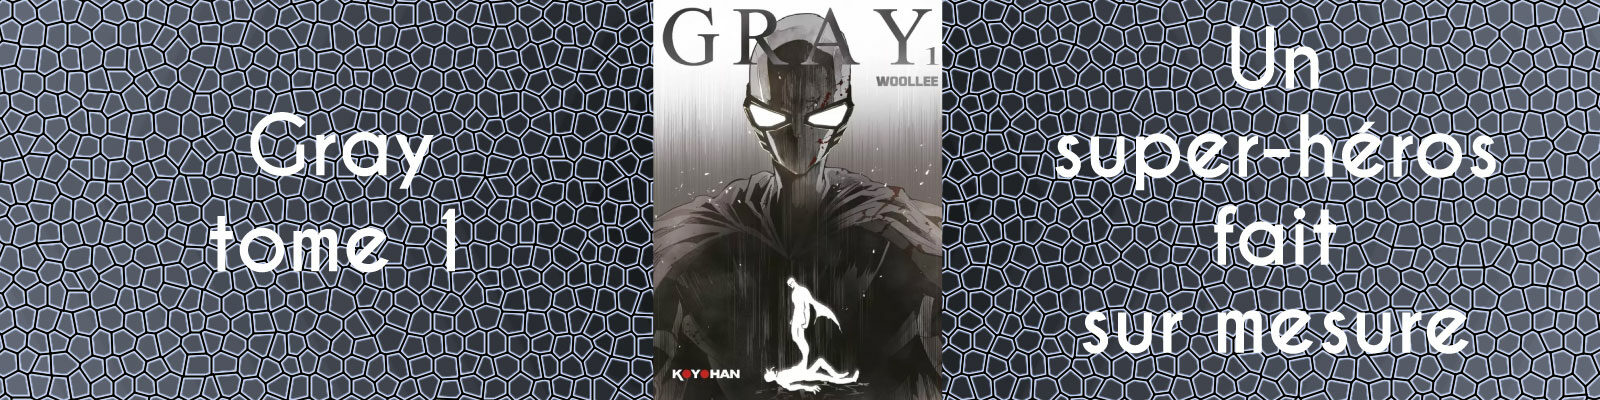 Gray-2